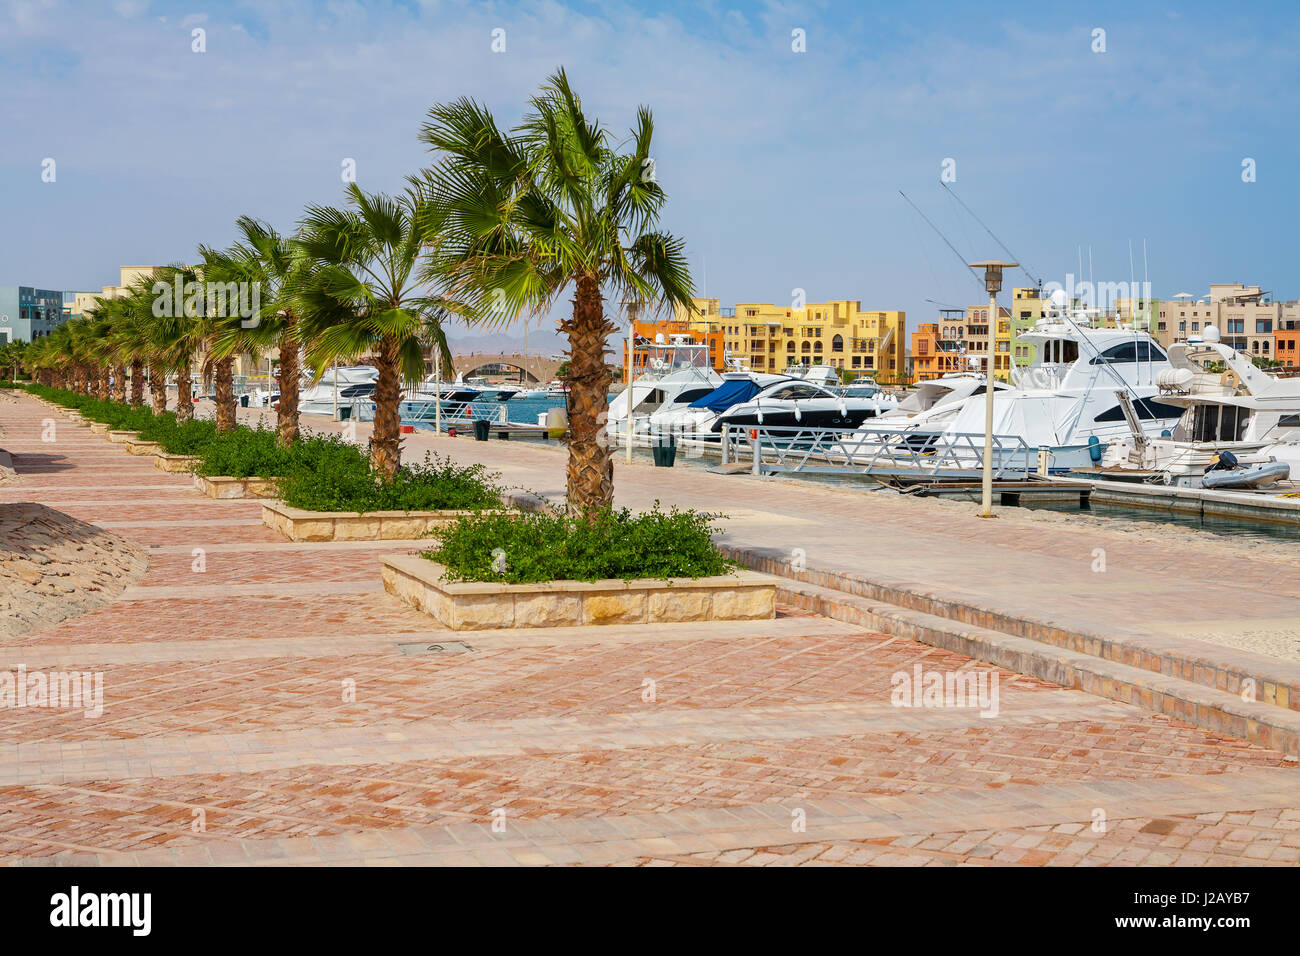 View of promenade at Abu Tig Marina. El Gouna, Egypt, North Africa Stock Photo